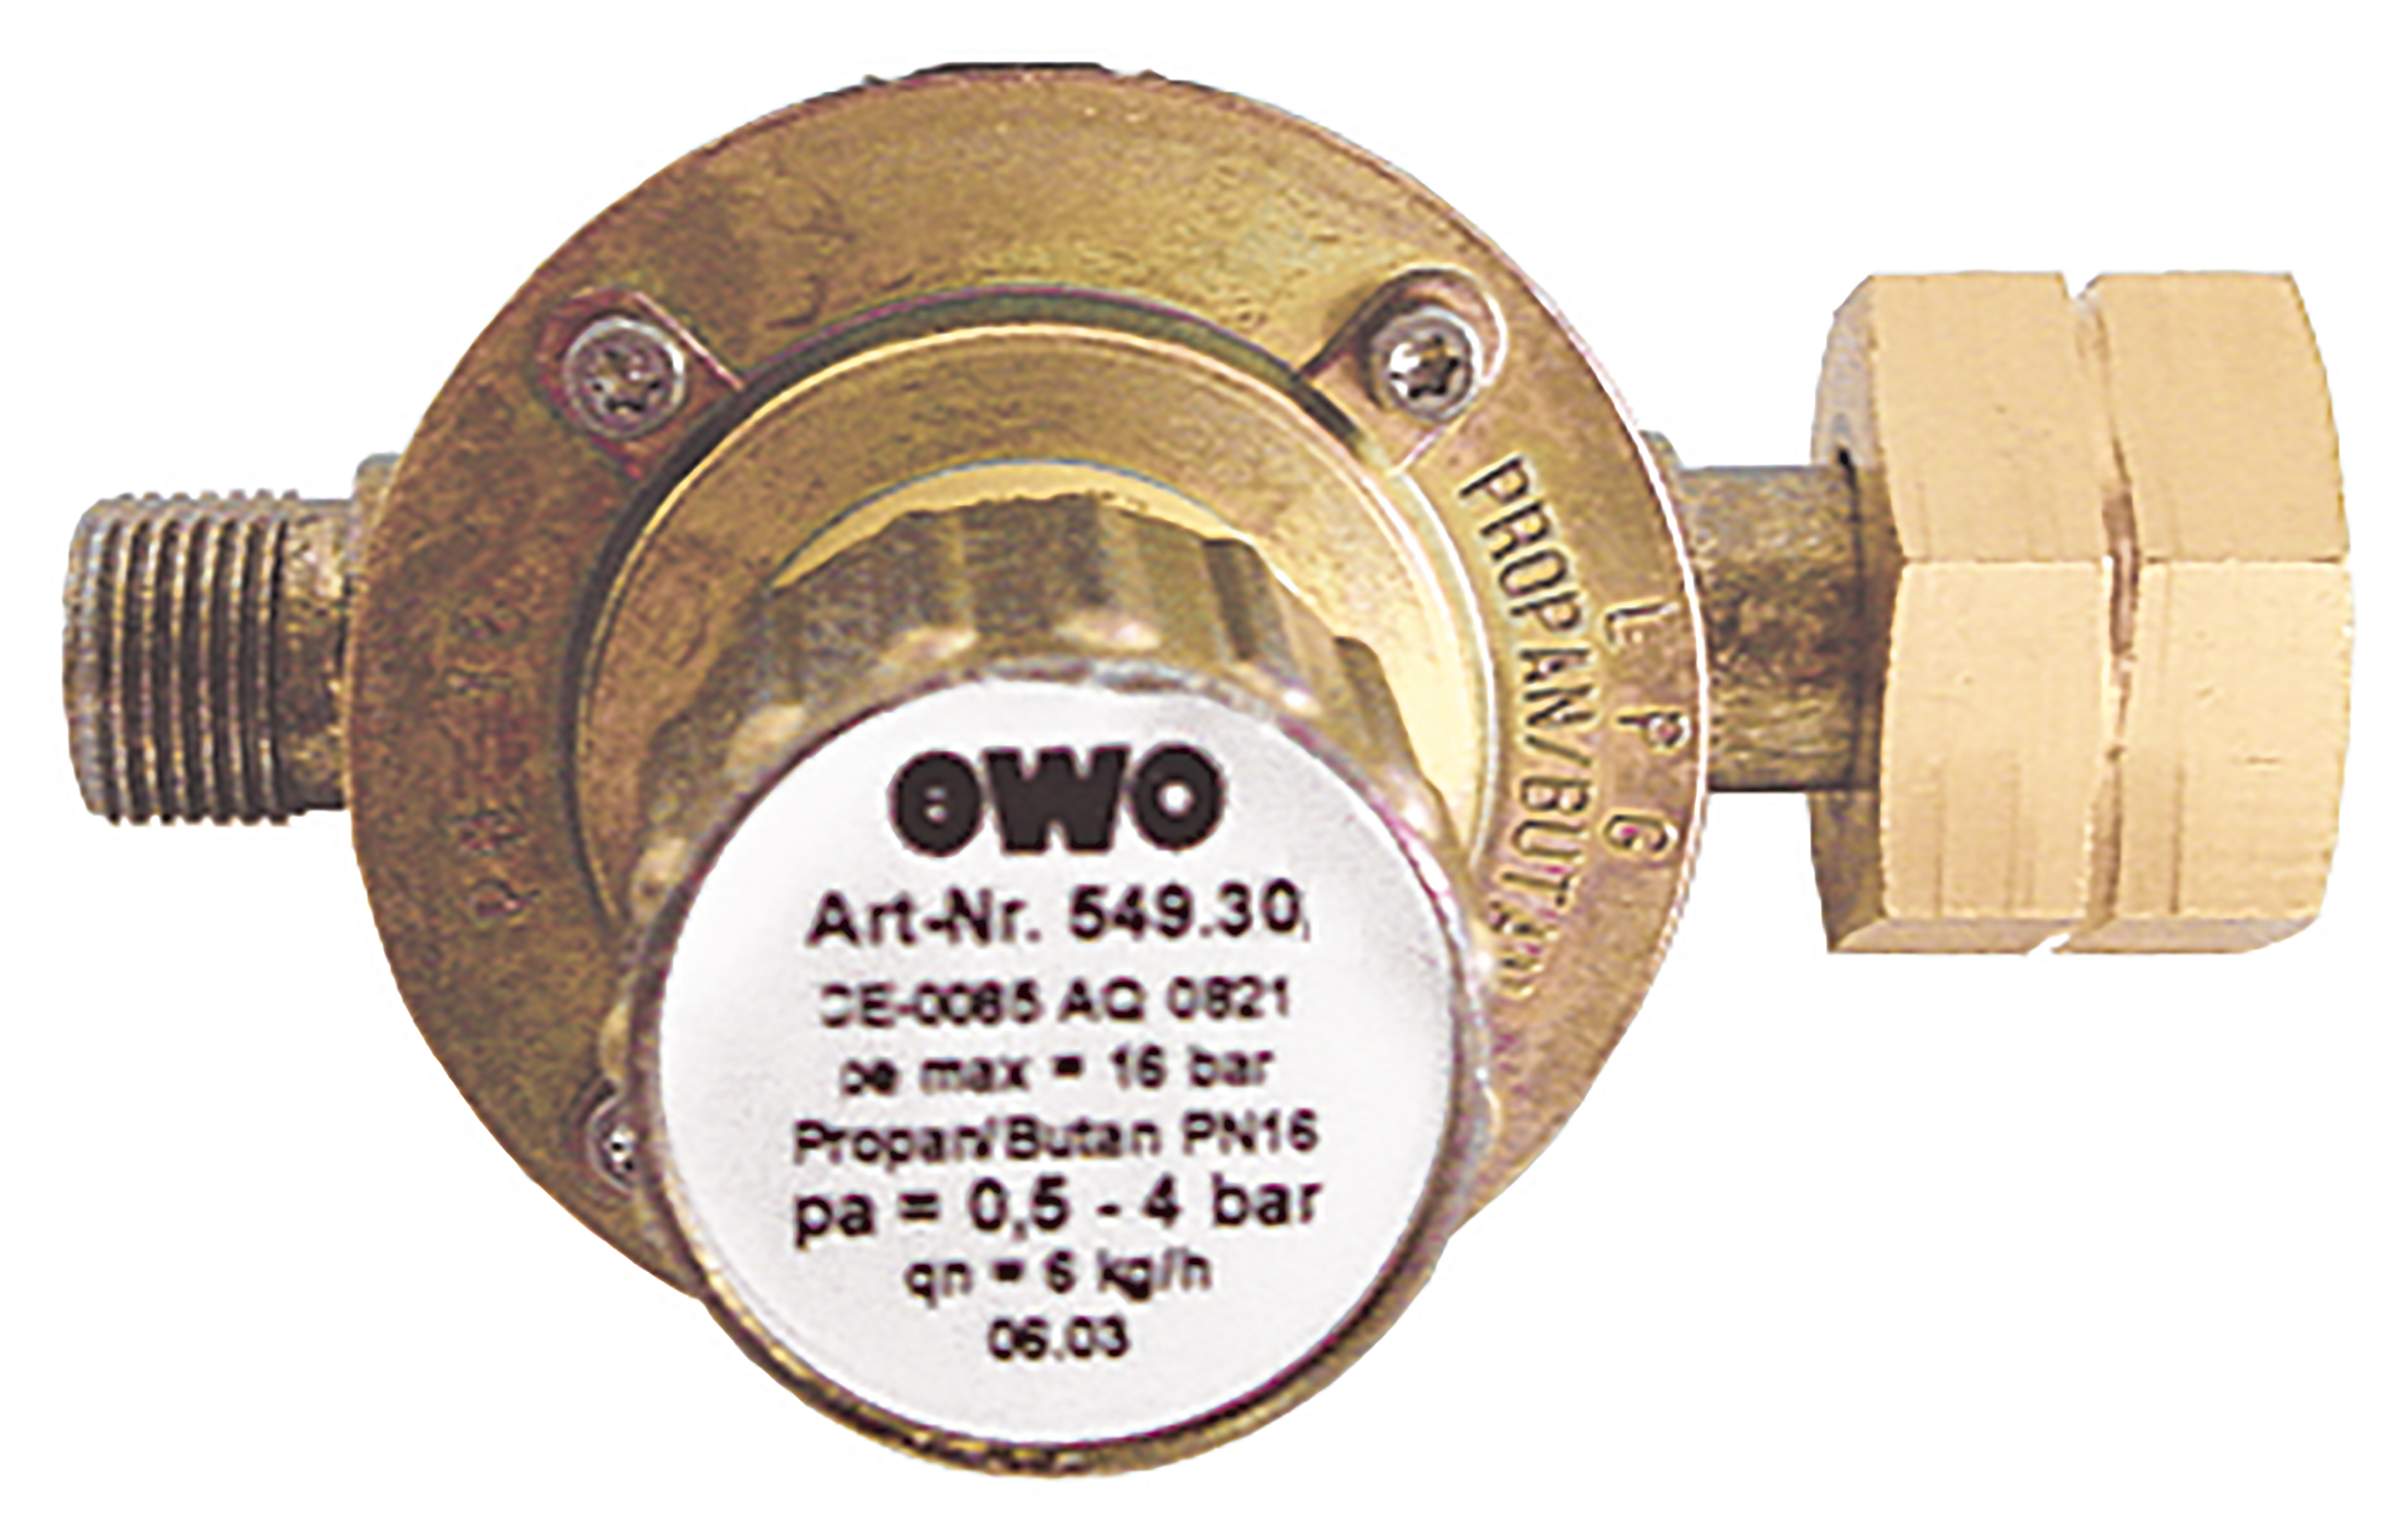 Middle pressure regulator with pressure scala, 0,5 - 4 bar, Combination-thread W 21,8 x 1/14 LH (Dispatch G 3/8 LH), Propane